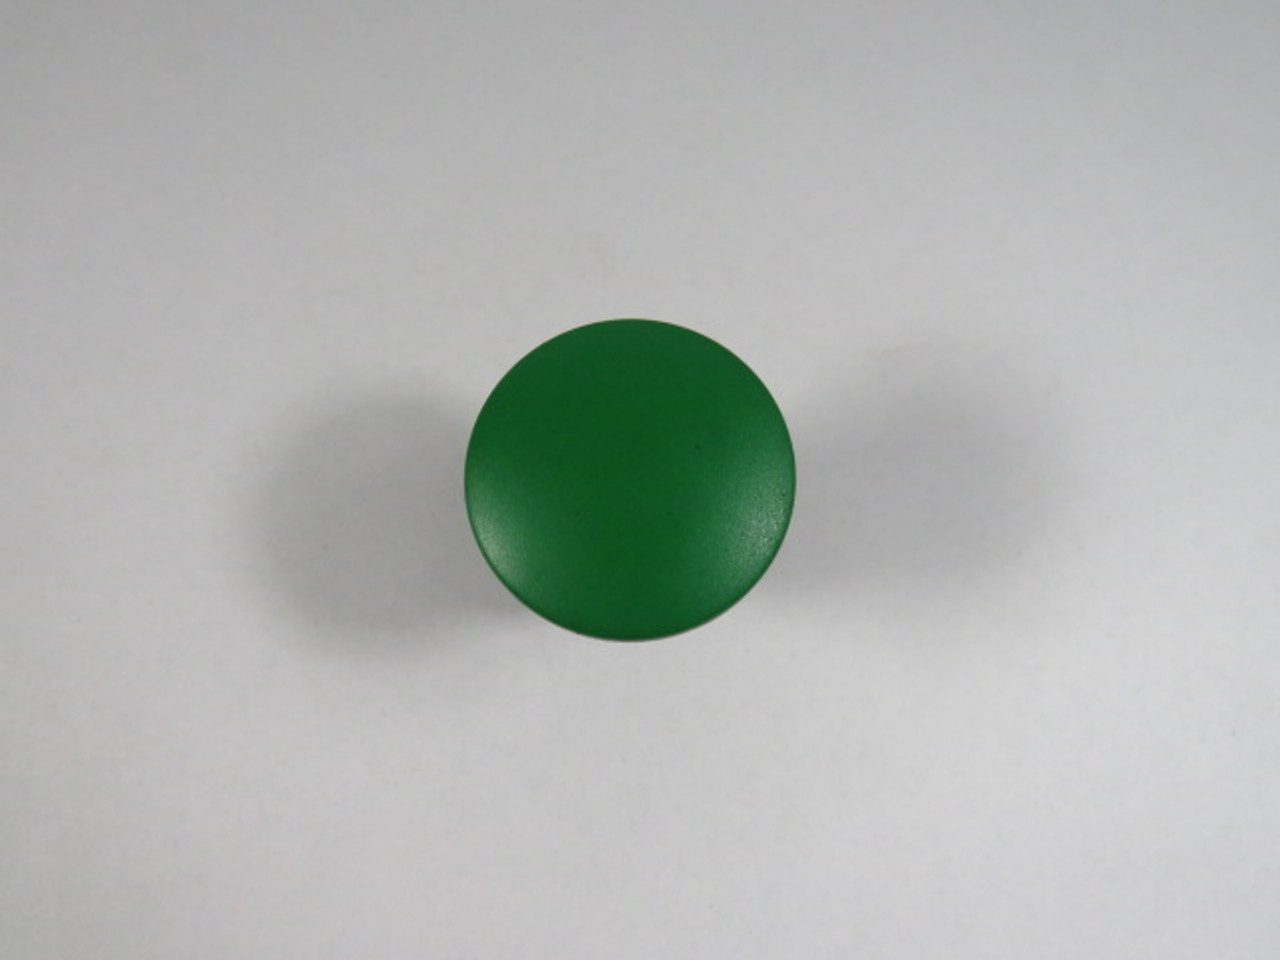 APT LA39-B2-M/G Green Mushroom Push Button Operator USED